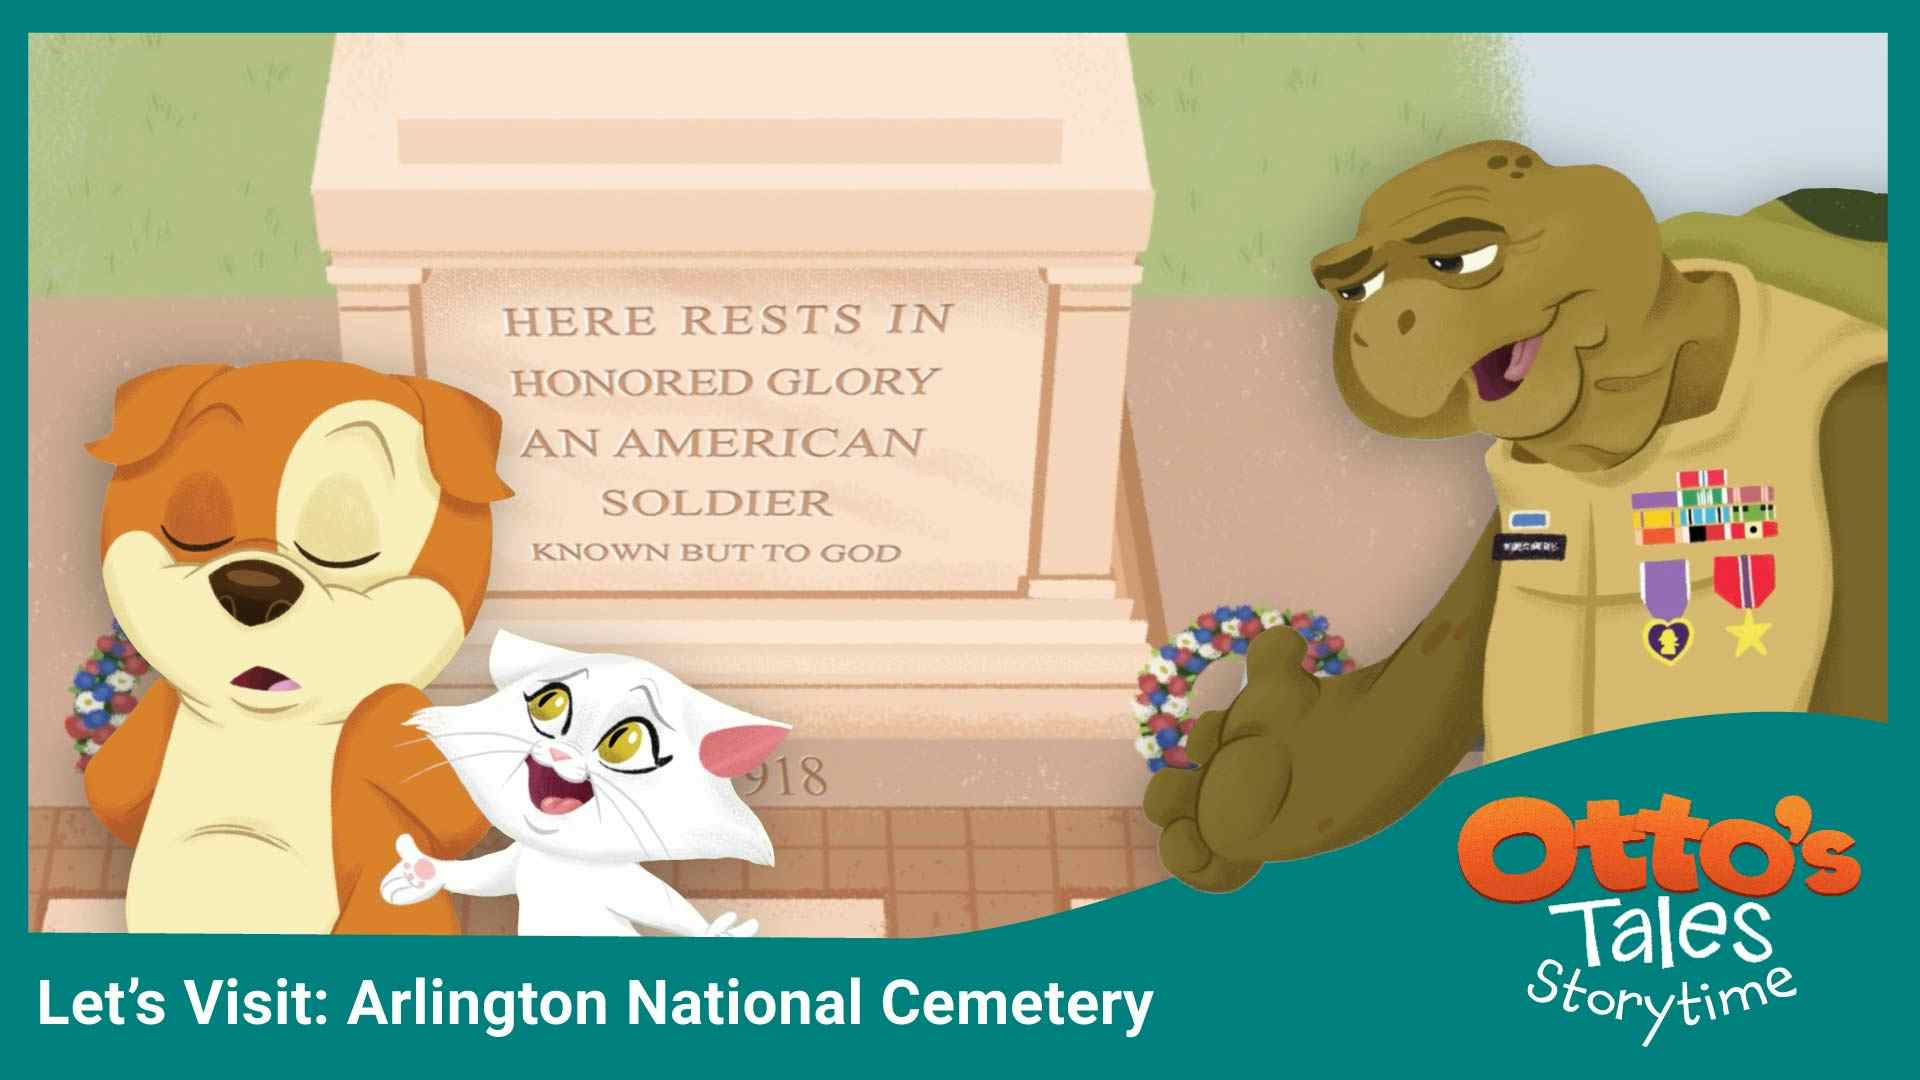 Let's Visit Arlington National Cemetery